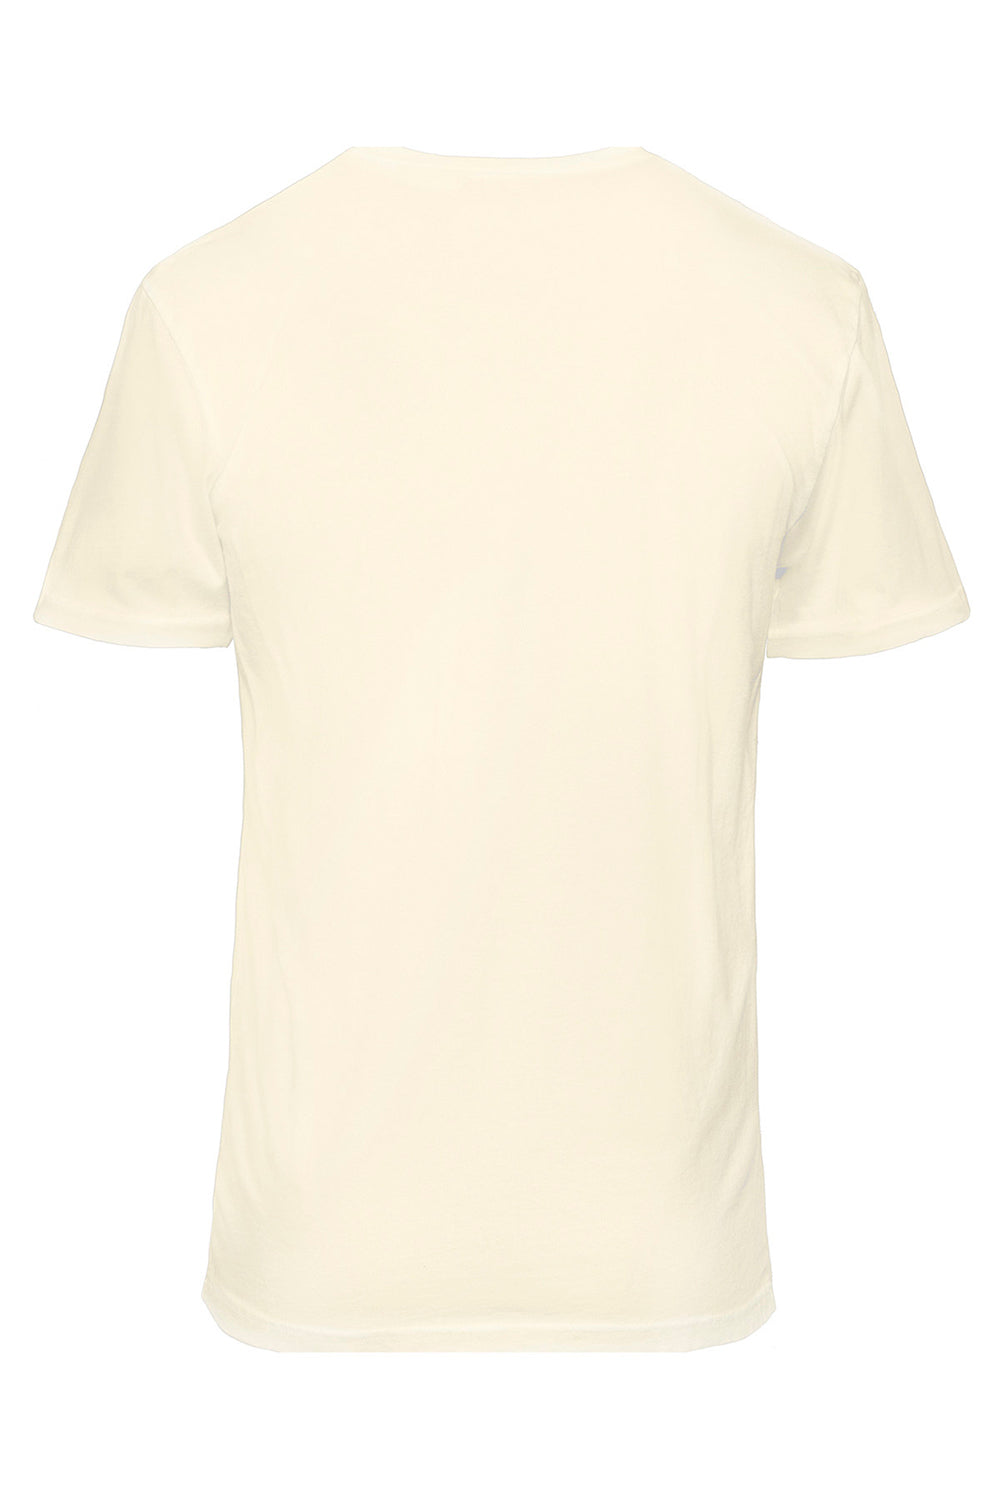 Next Level 3600SW Mens Soft Wash Short Sleeve Crewneck T-Shirt Natural Flat Back